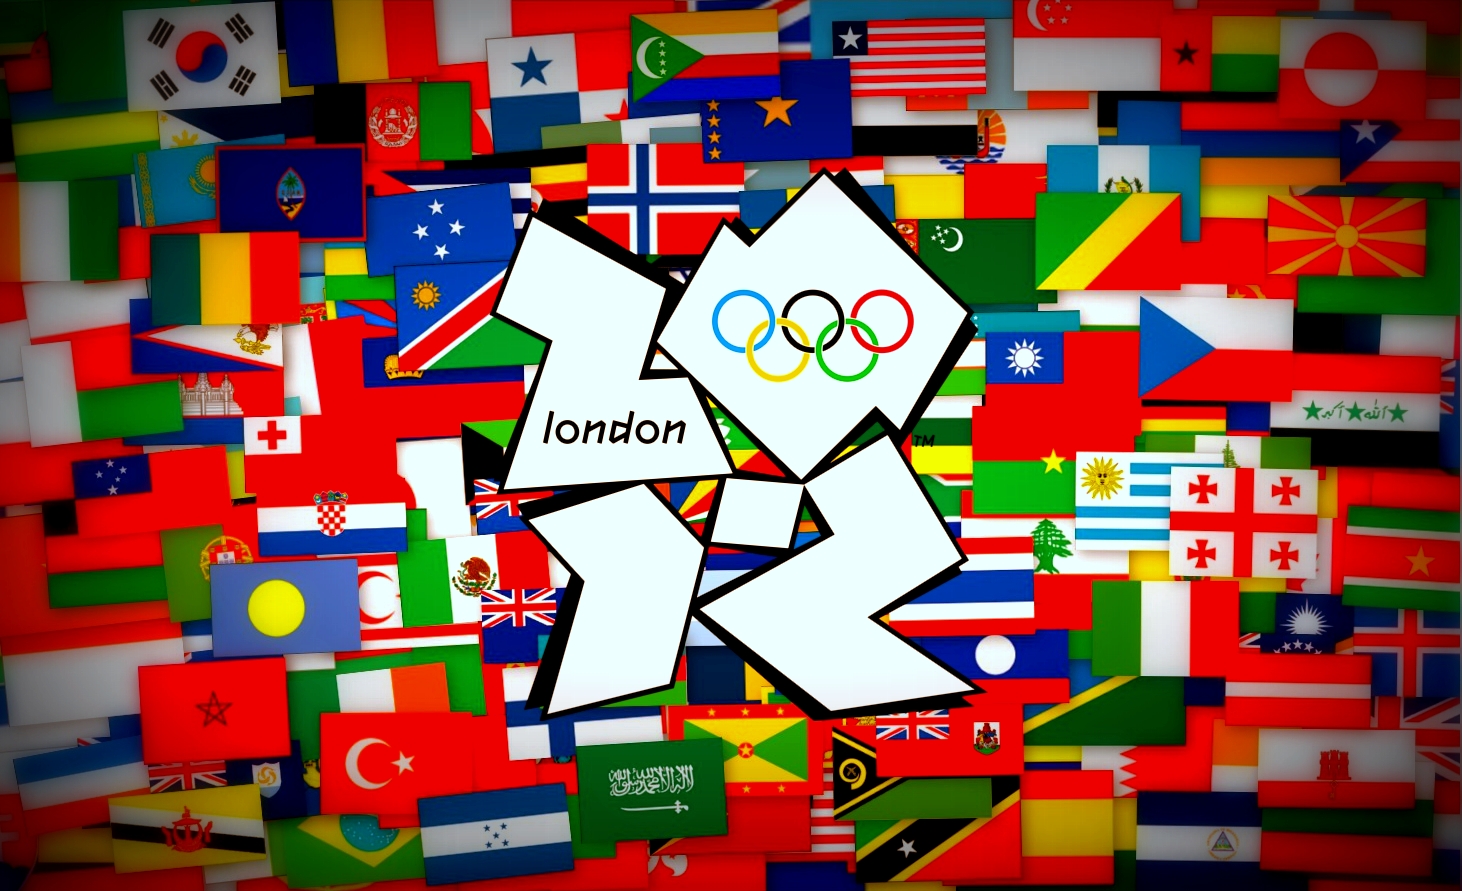 http://4.bp.blogspot.com/-i5YXeFrXFGA/T_i7mvpkzHI/AAAAAAAAA3o/DcDkj8L6ibE/s1600/London+Olympic+Country+Flags+Wallpaper.jpg